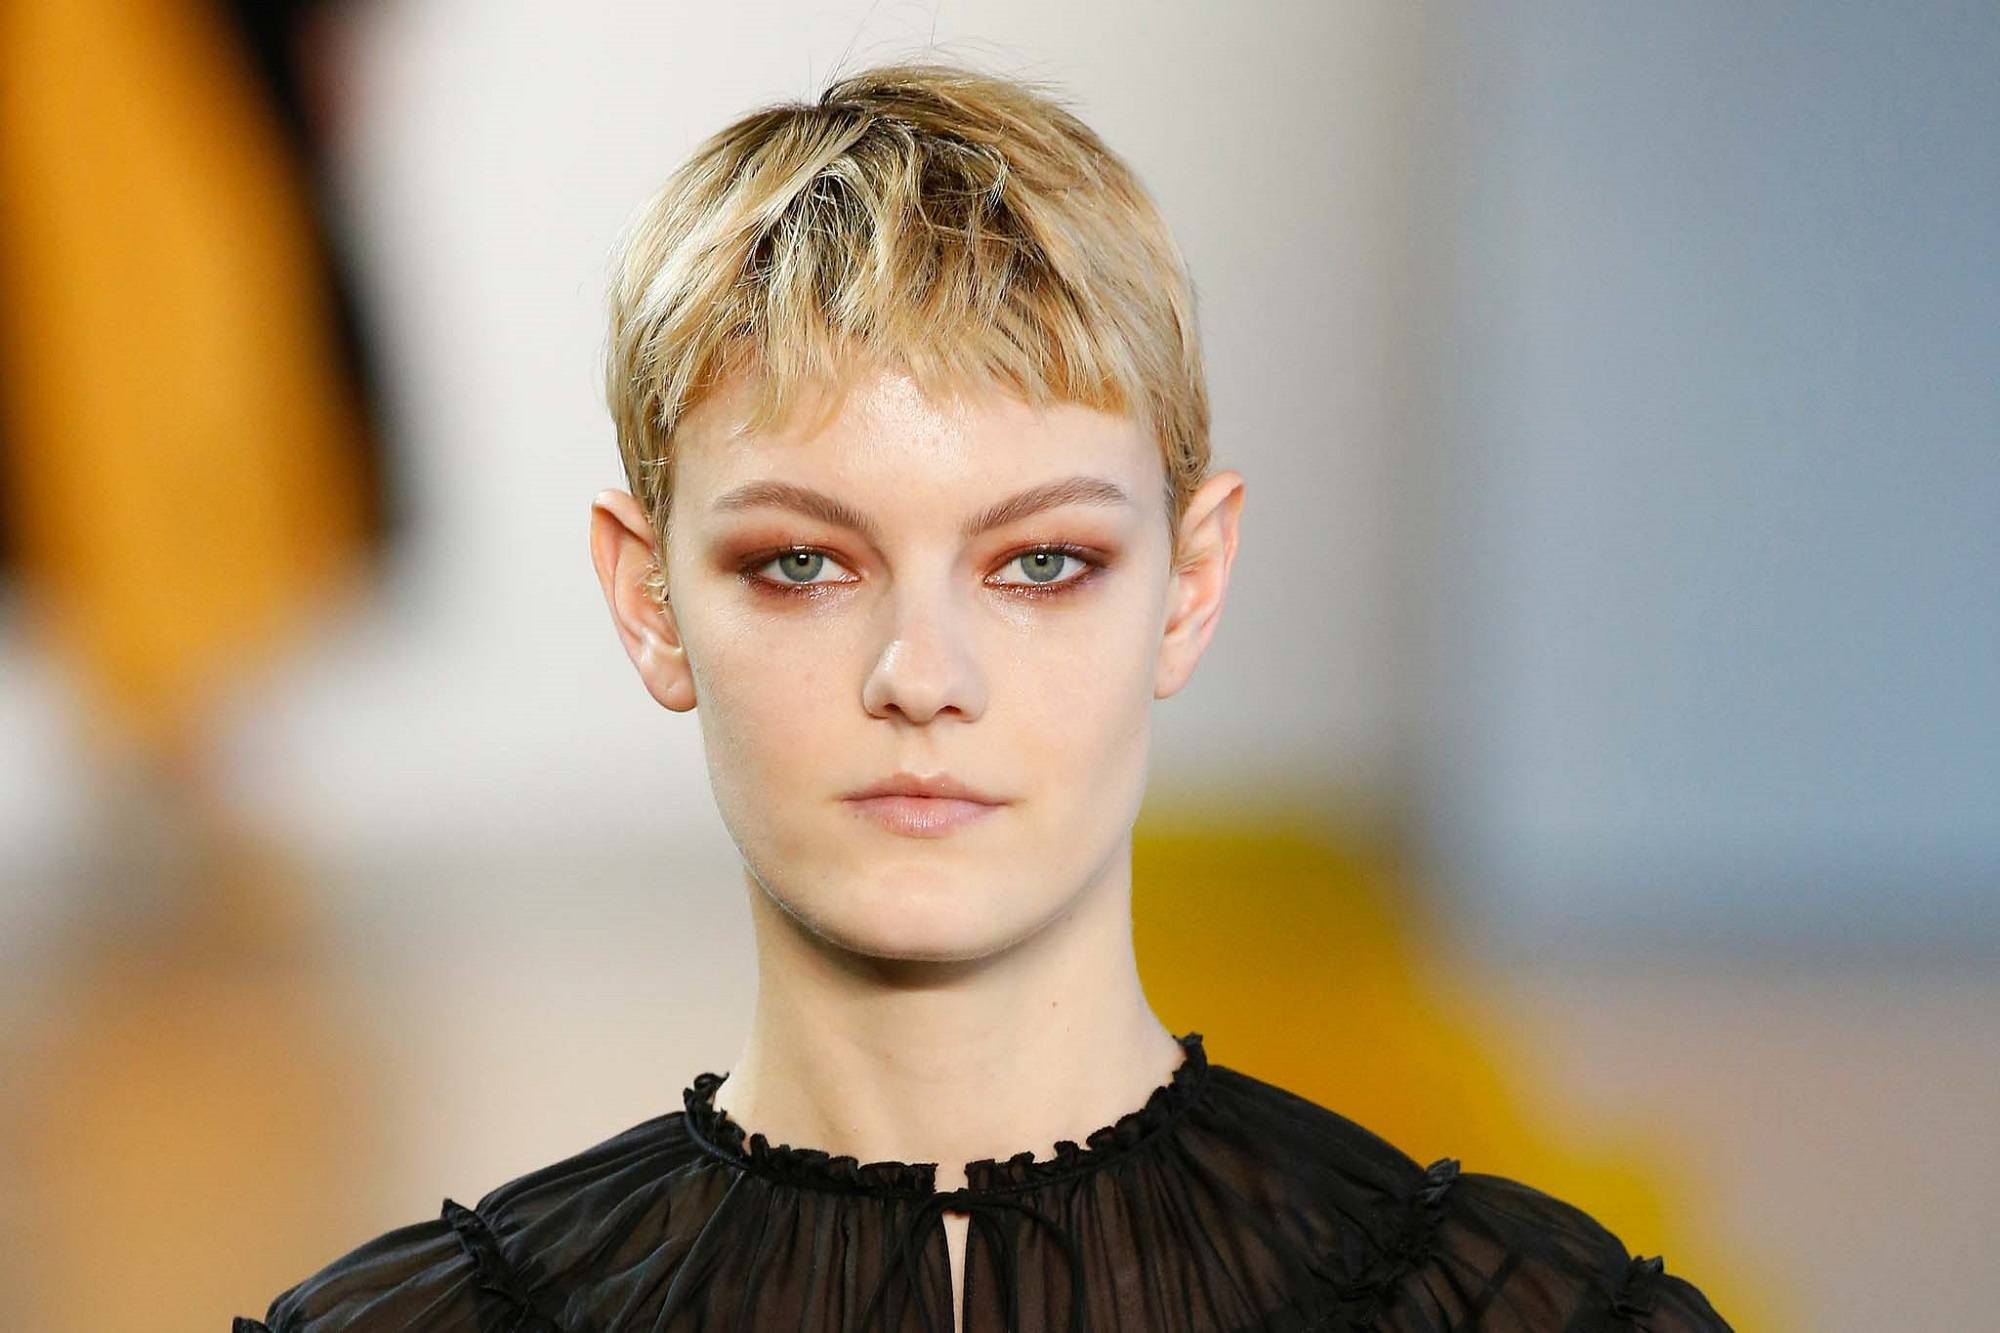 New York Fashion Week hair: Closeup shot of a woman with short blonde pixie cut wearing a black hair